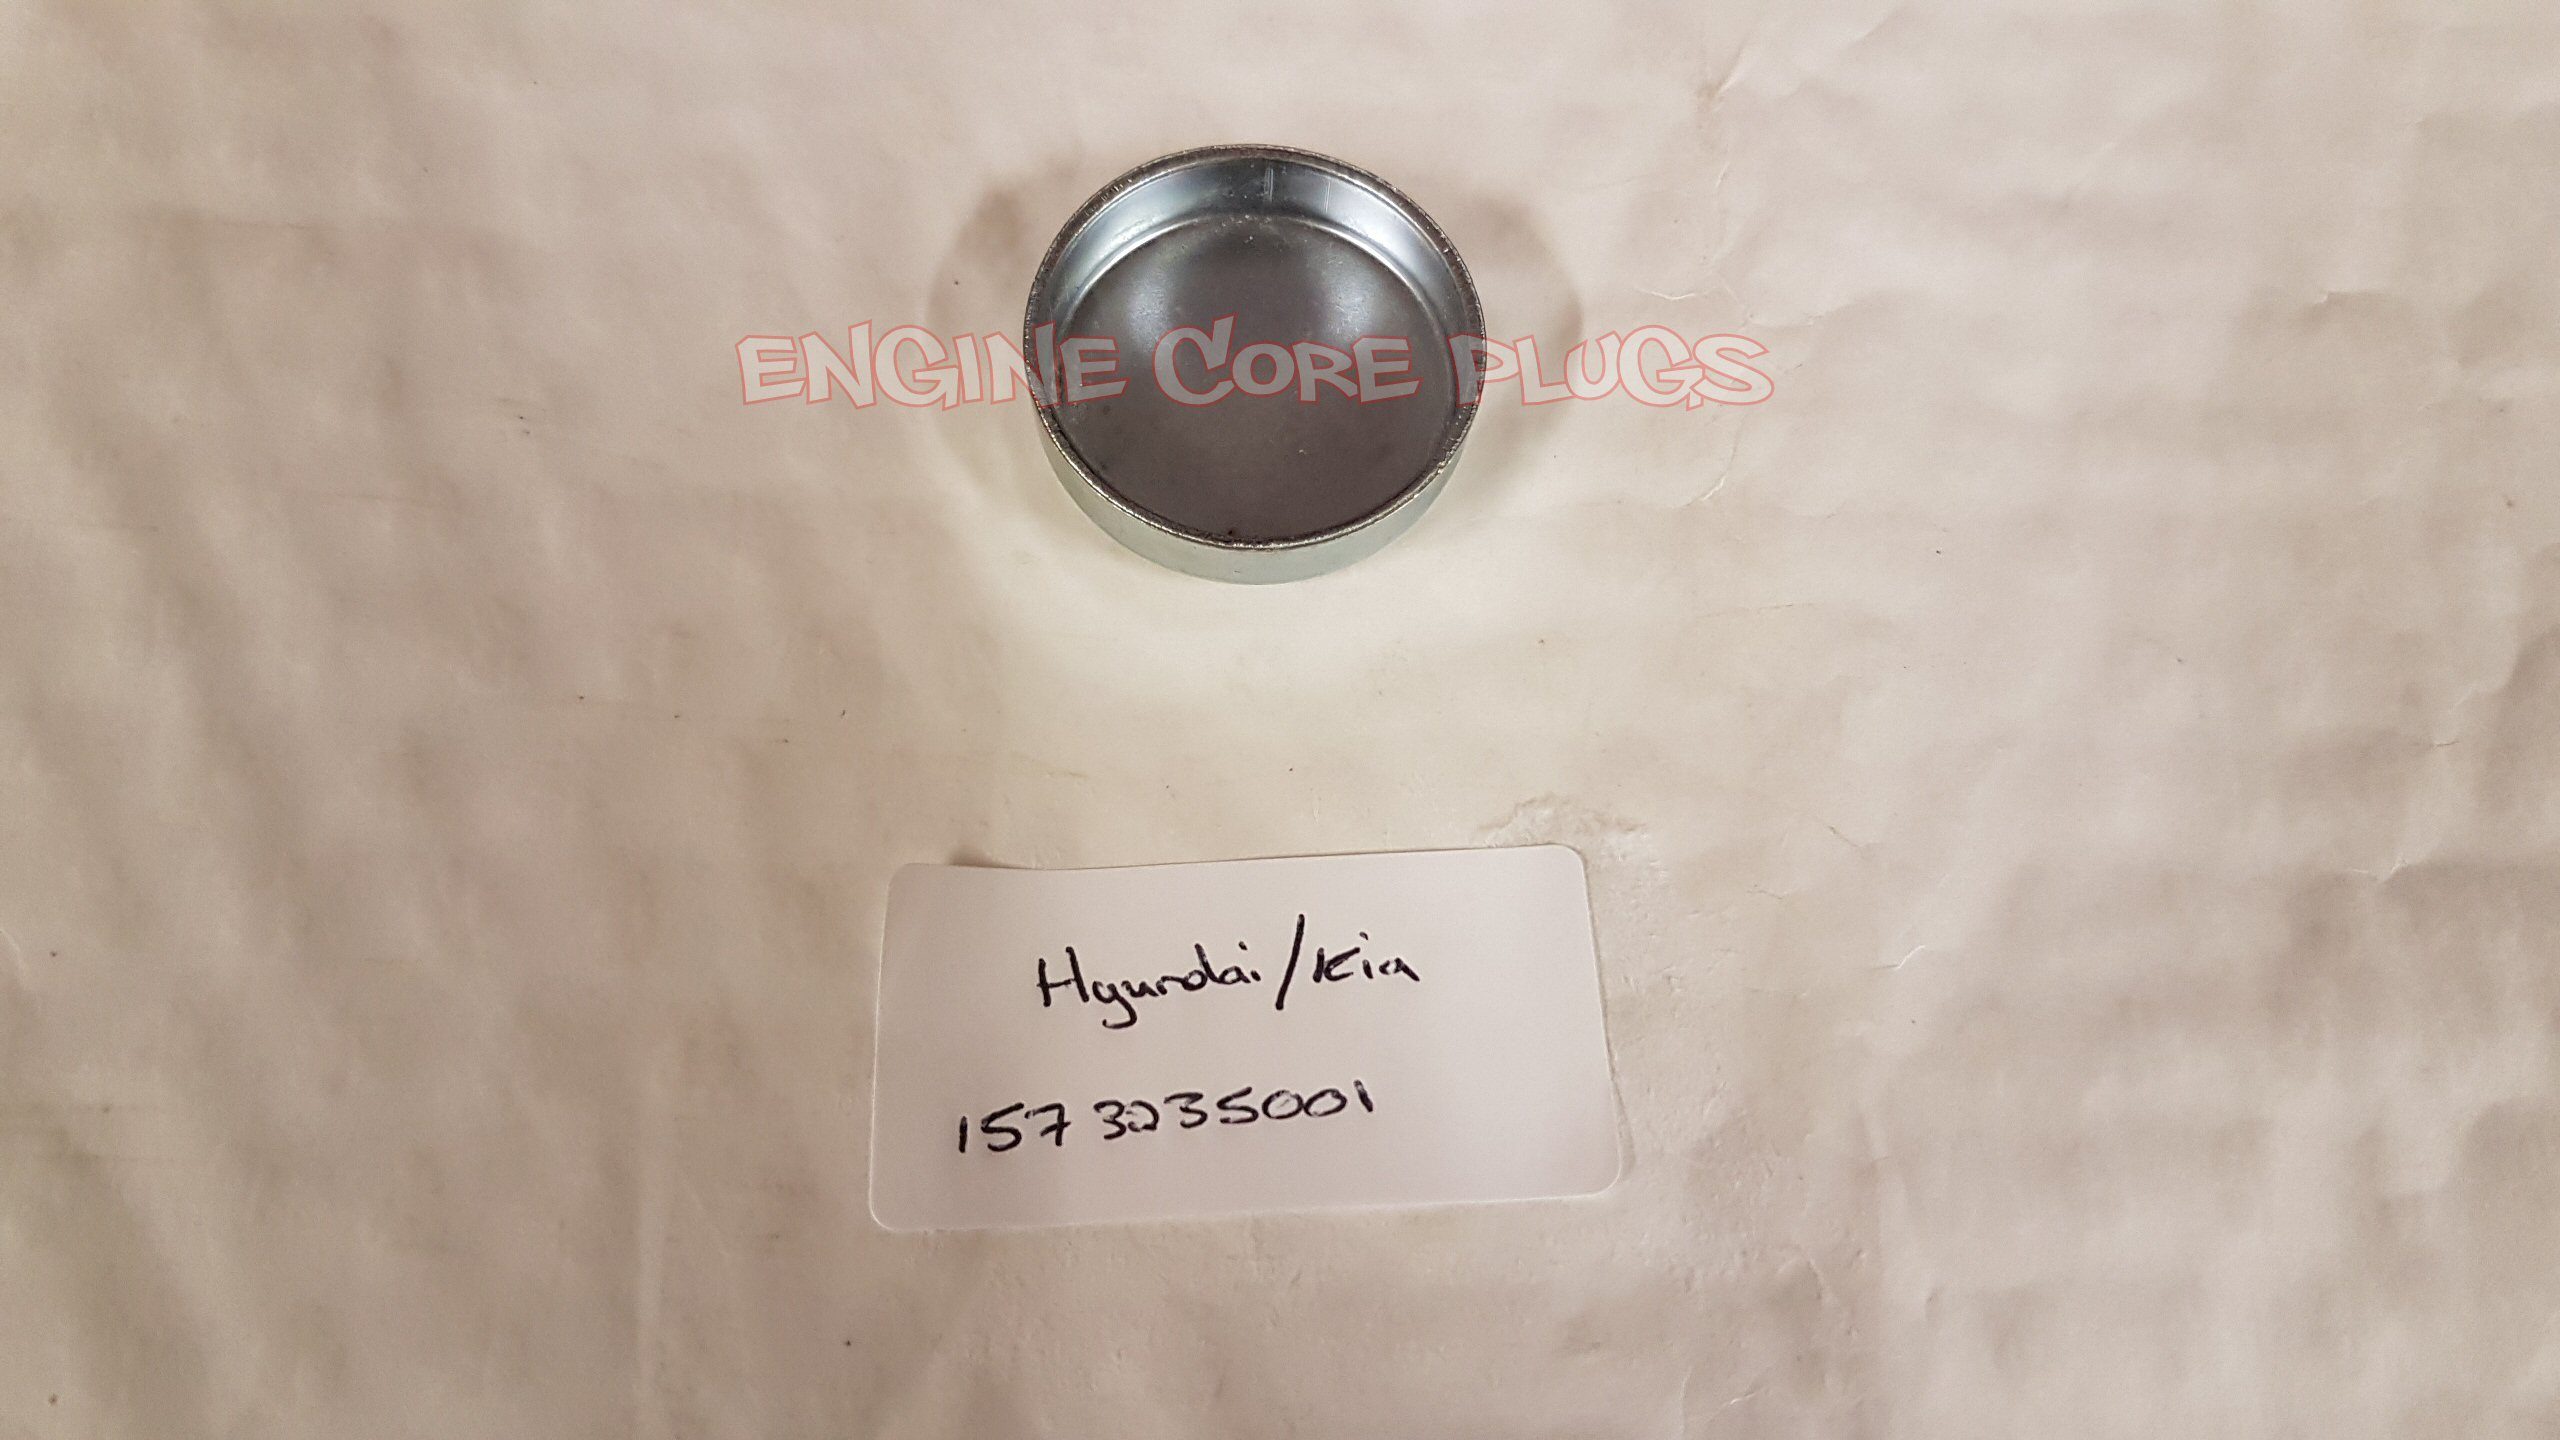 Hyundai Kia 1573235001 automotive cup core plug